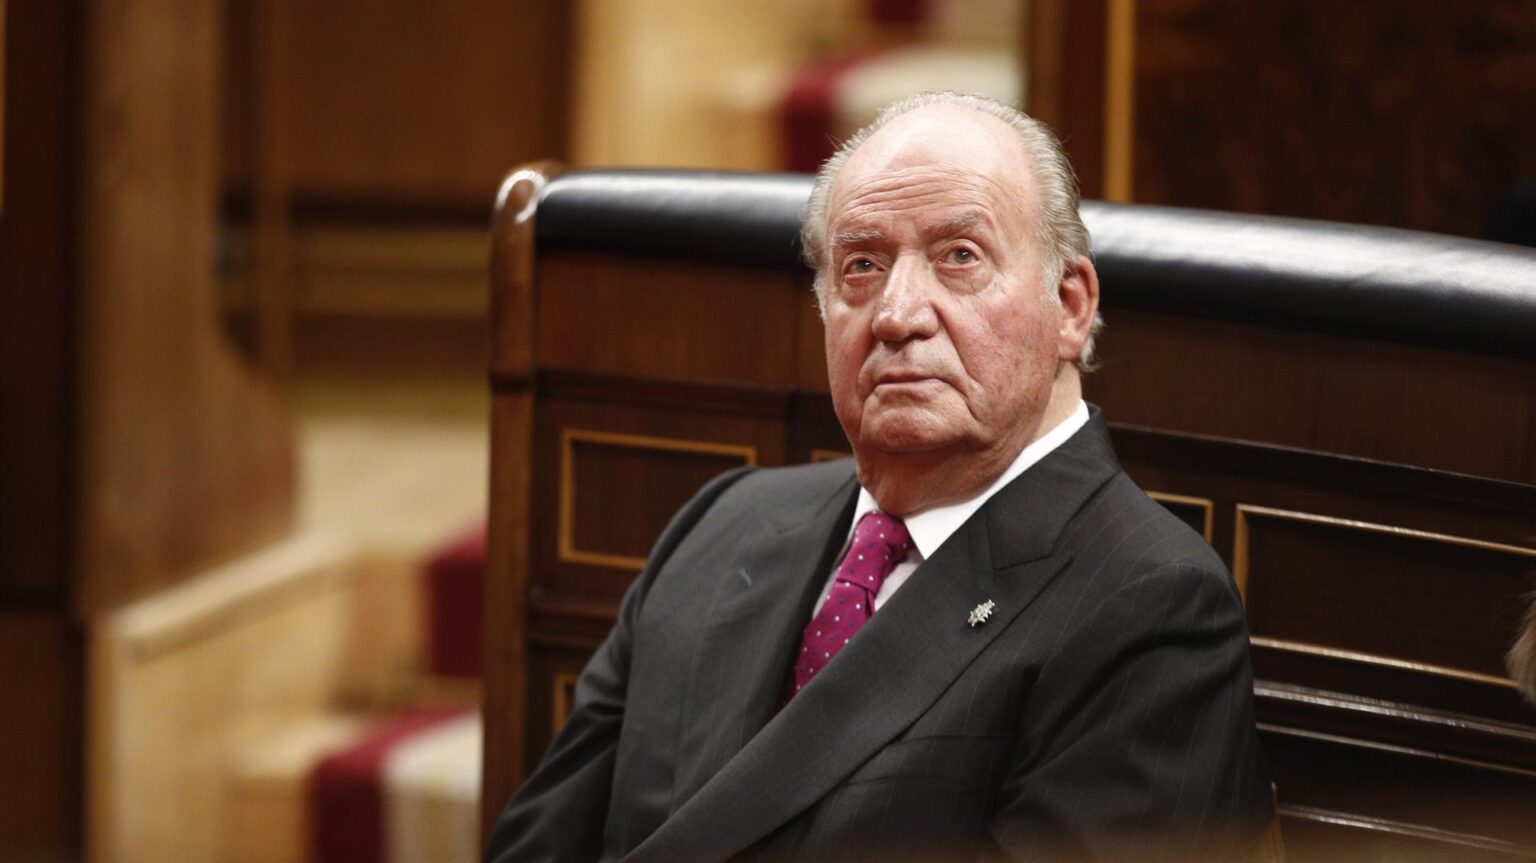 La Casa Real confirma que Juan Carlos I regresa este jueves a España